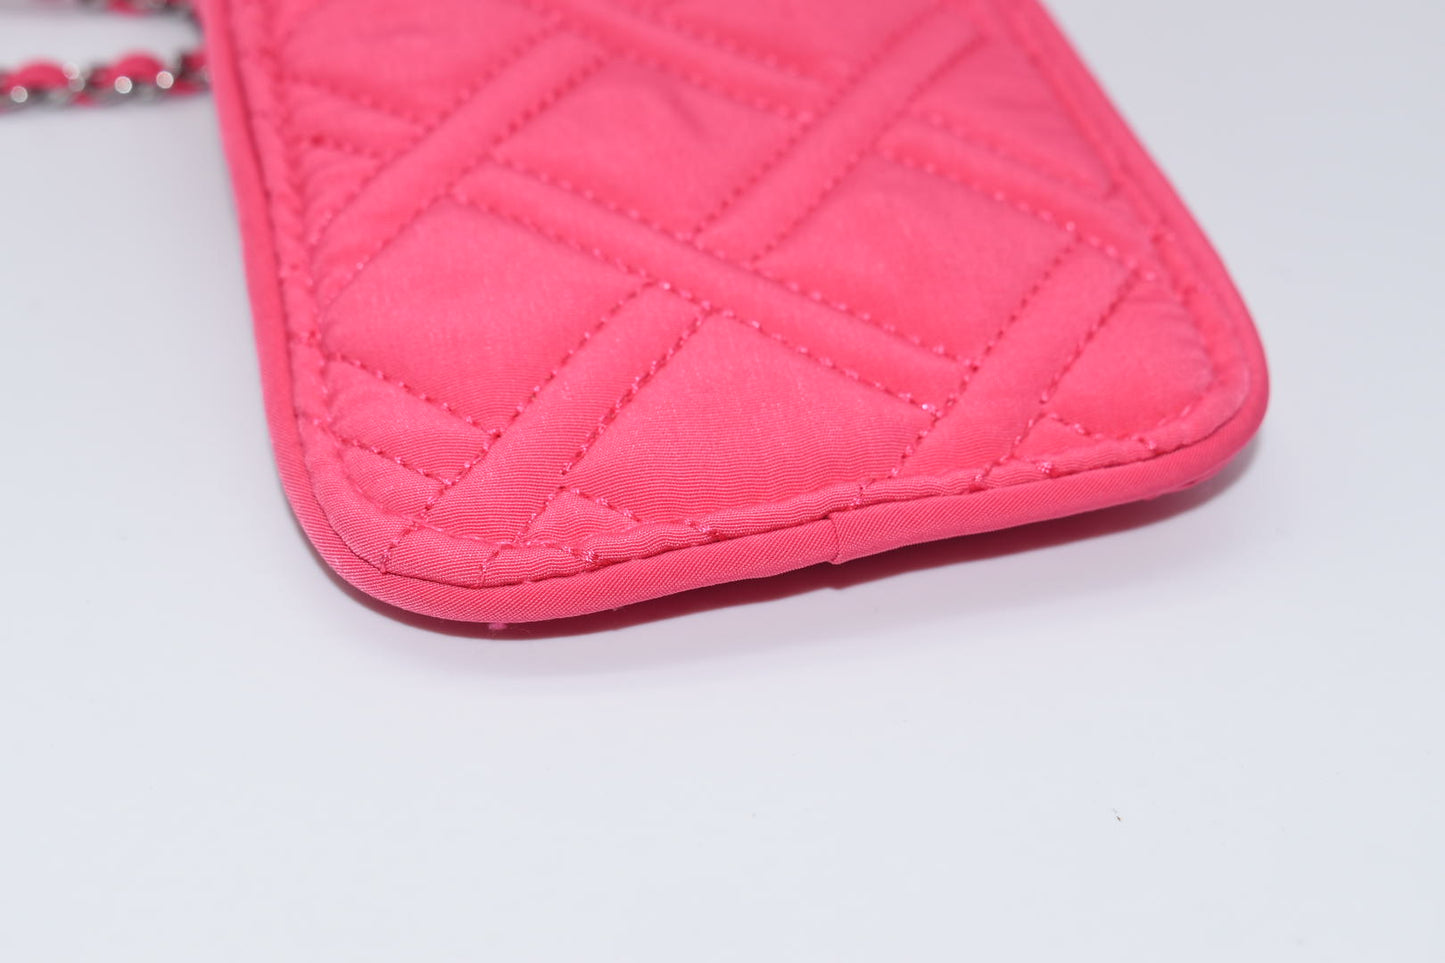 Vera Bradley Cell Phone Crossbody Bag in "Microfiber Pink"